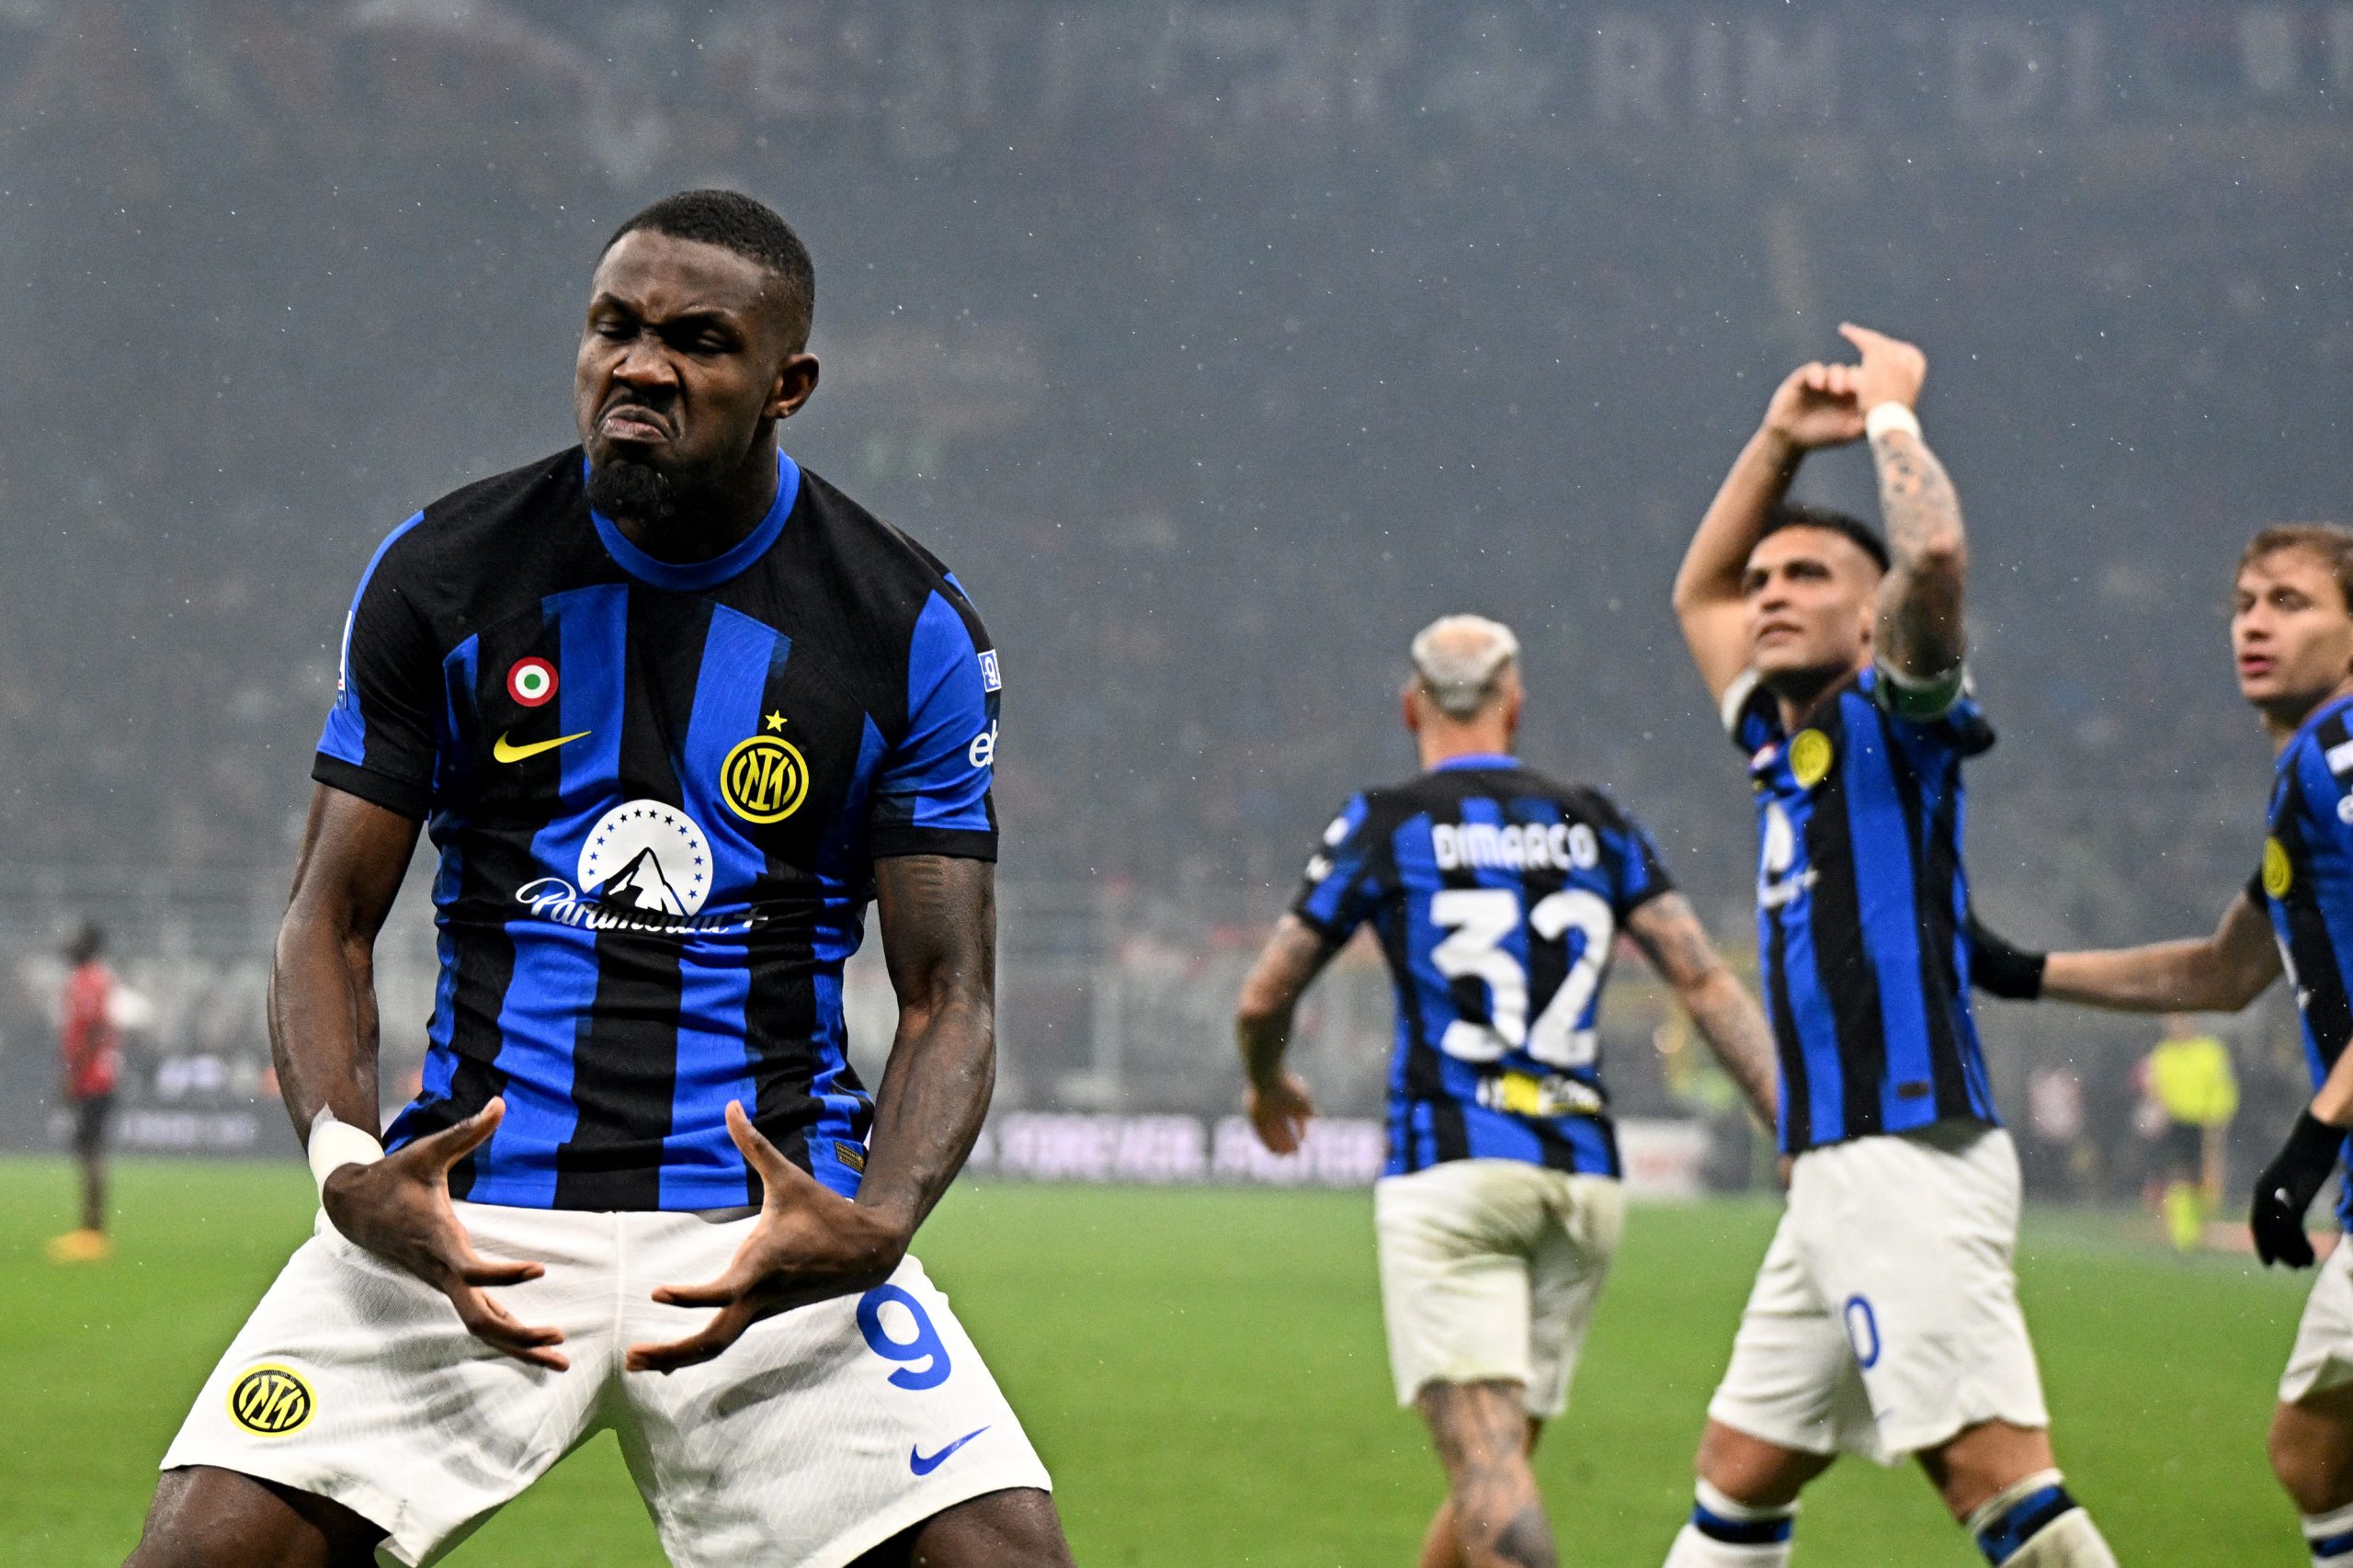 VIDEO – Milan Inter 1 2, Serie A: gol e highlights della partita